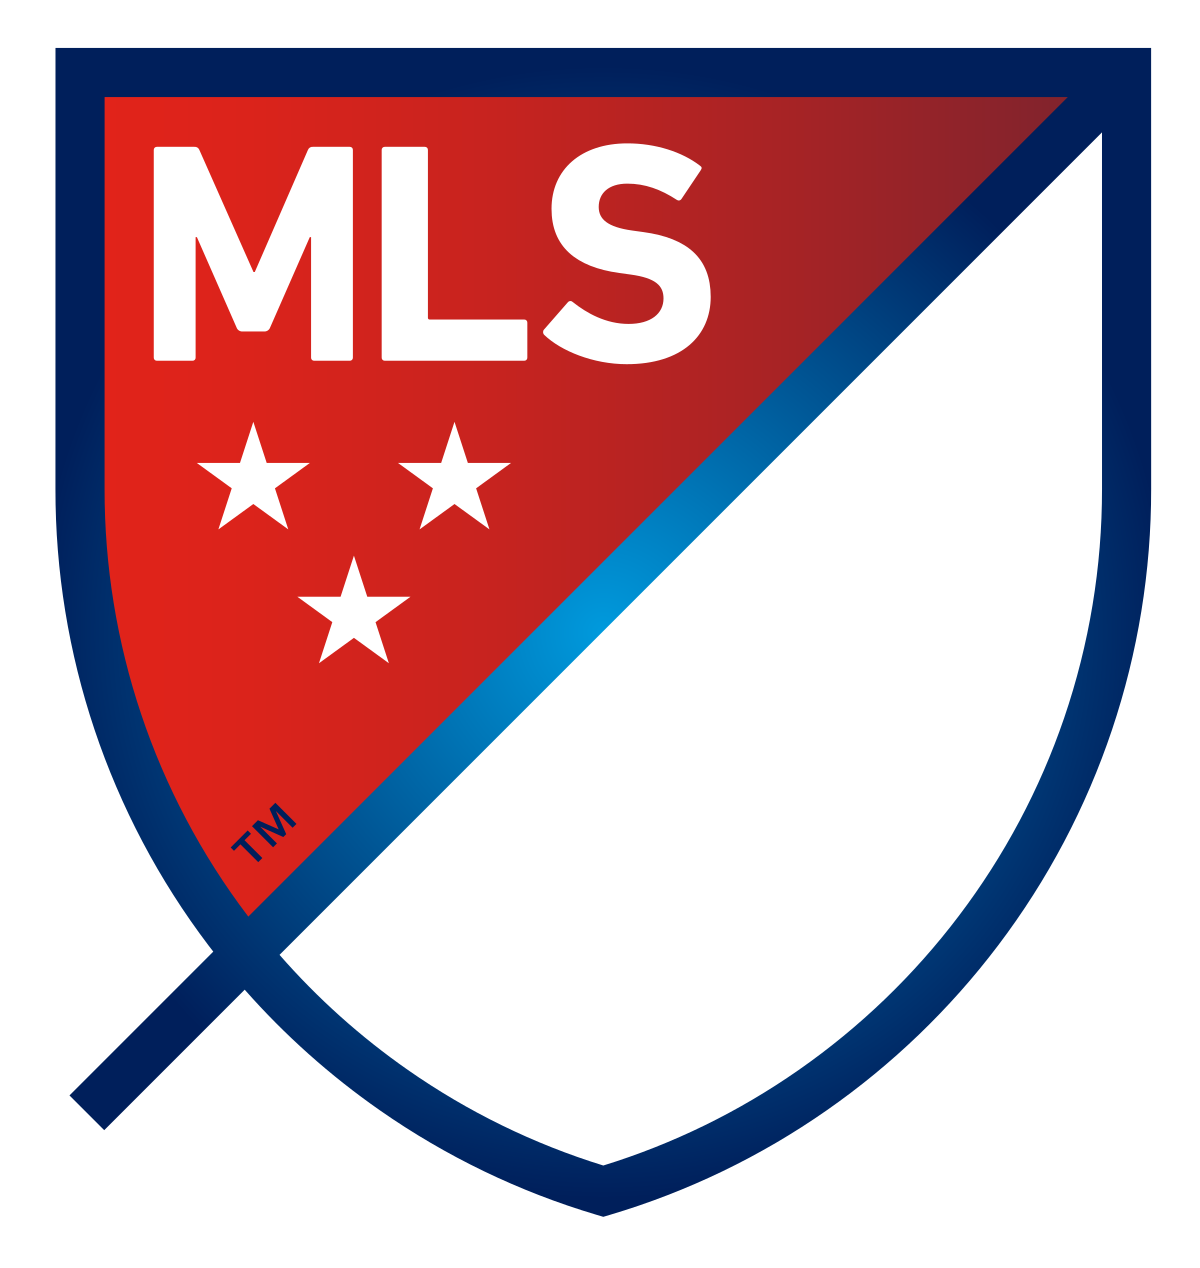 MLS Genuine Merchandise